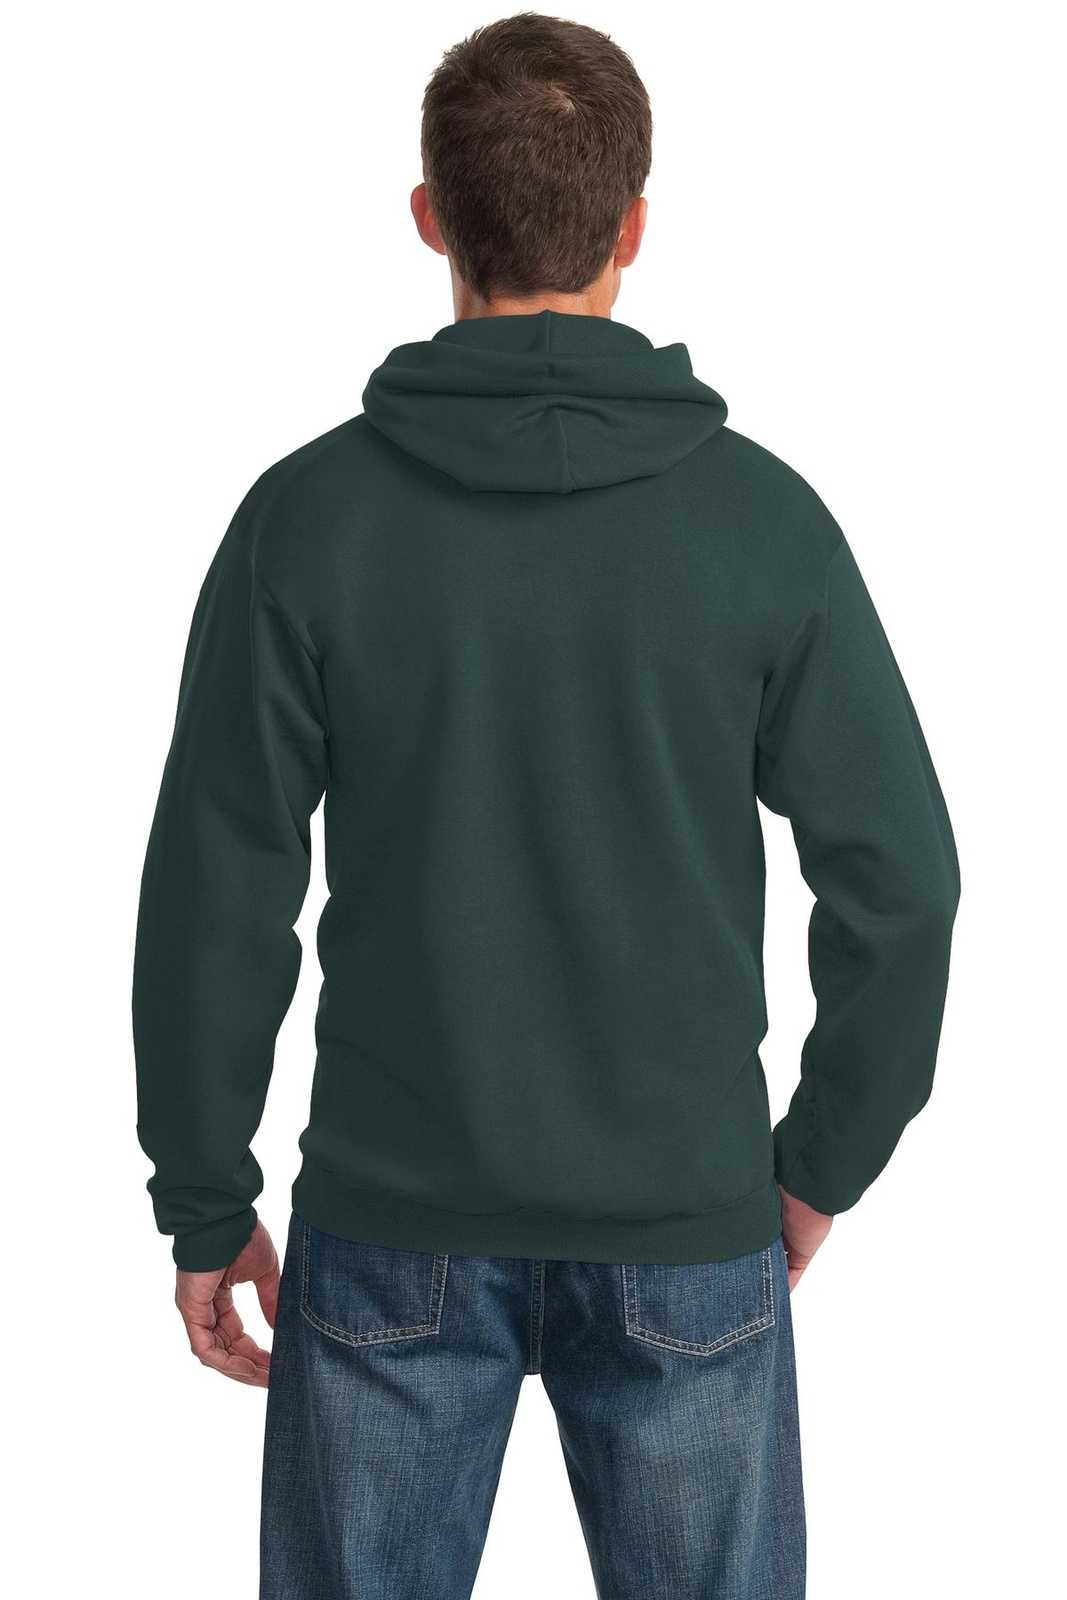 Port & Company PC90H Essential Fleece Pullover Hooded Sweatshirt - Dark Green - HIT a Double - 1